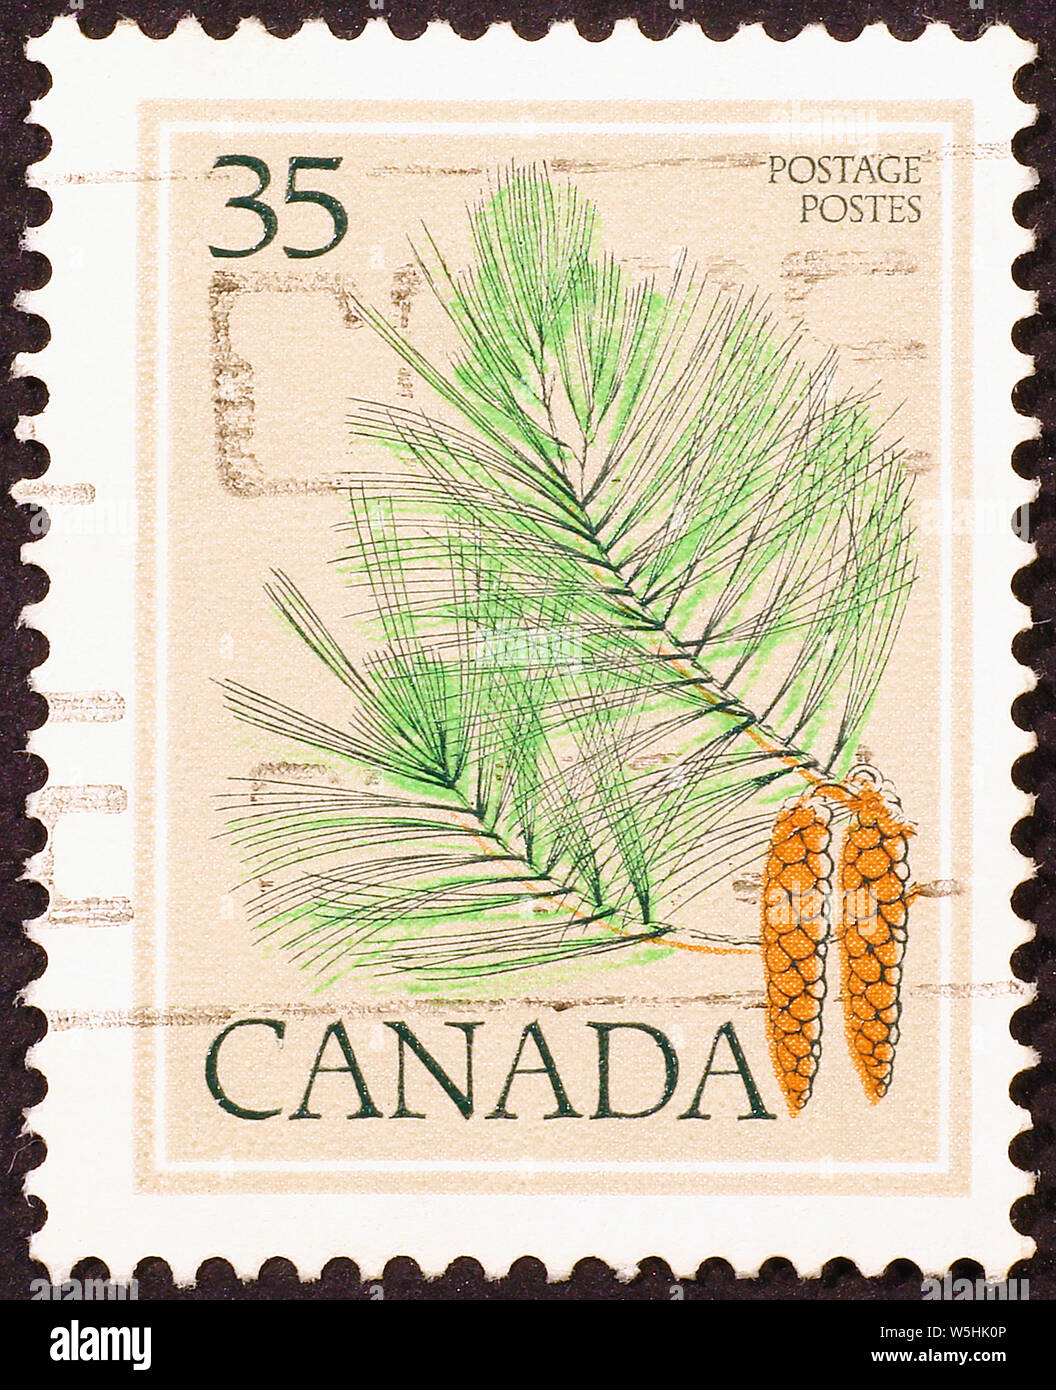 Douglas fir needles & cones on canadian stamp Stock Photo